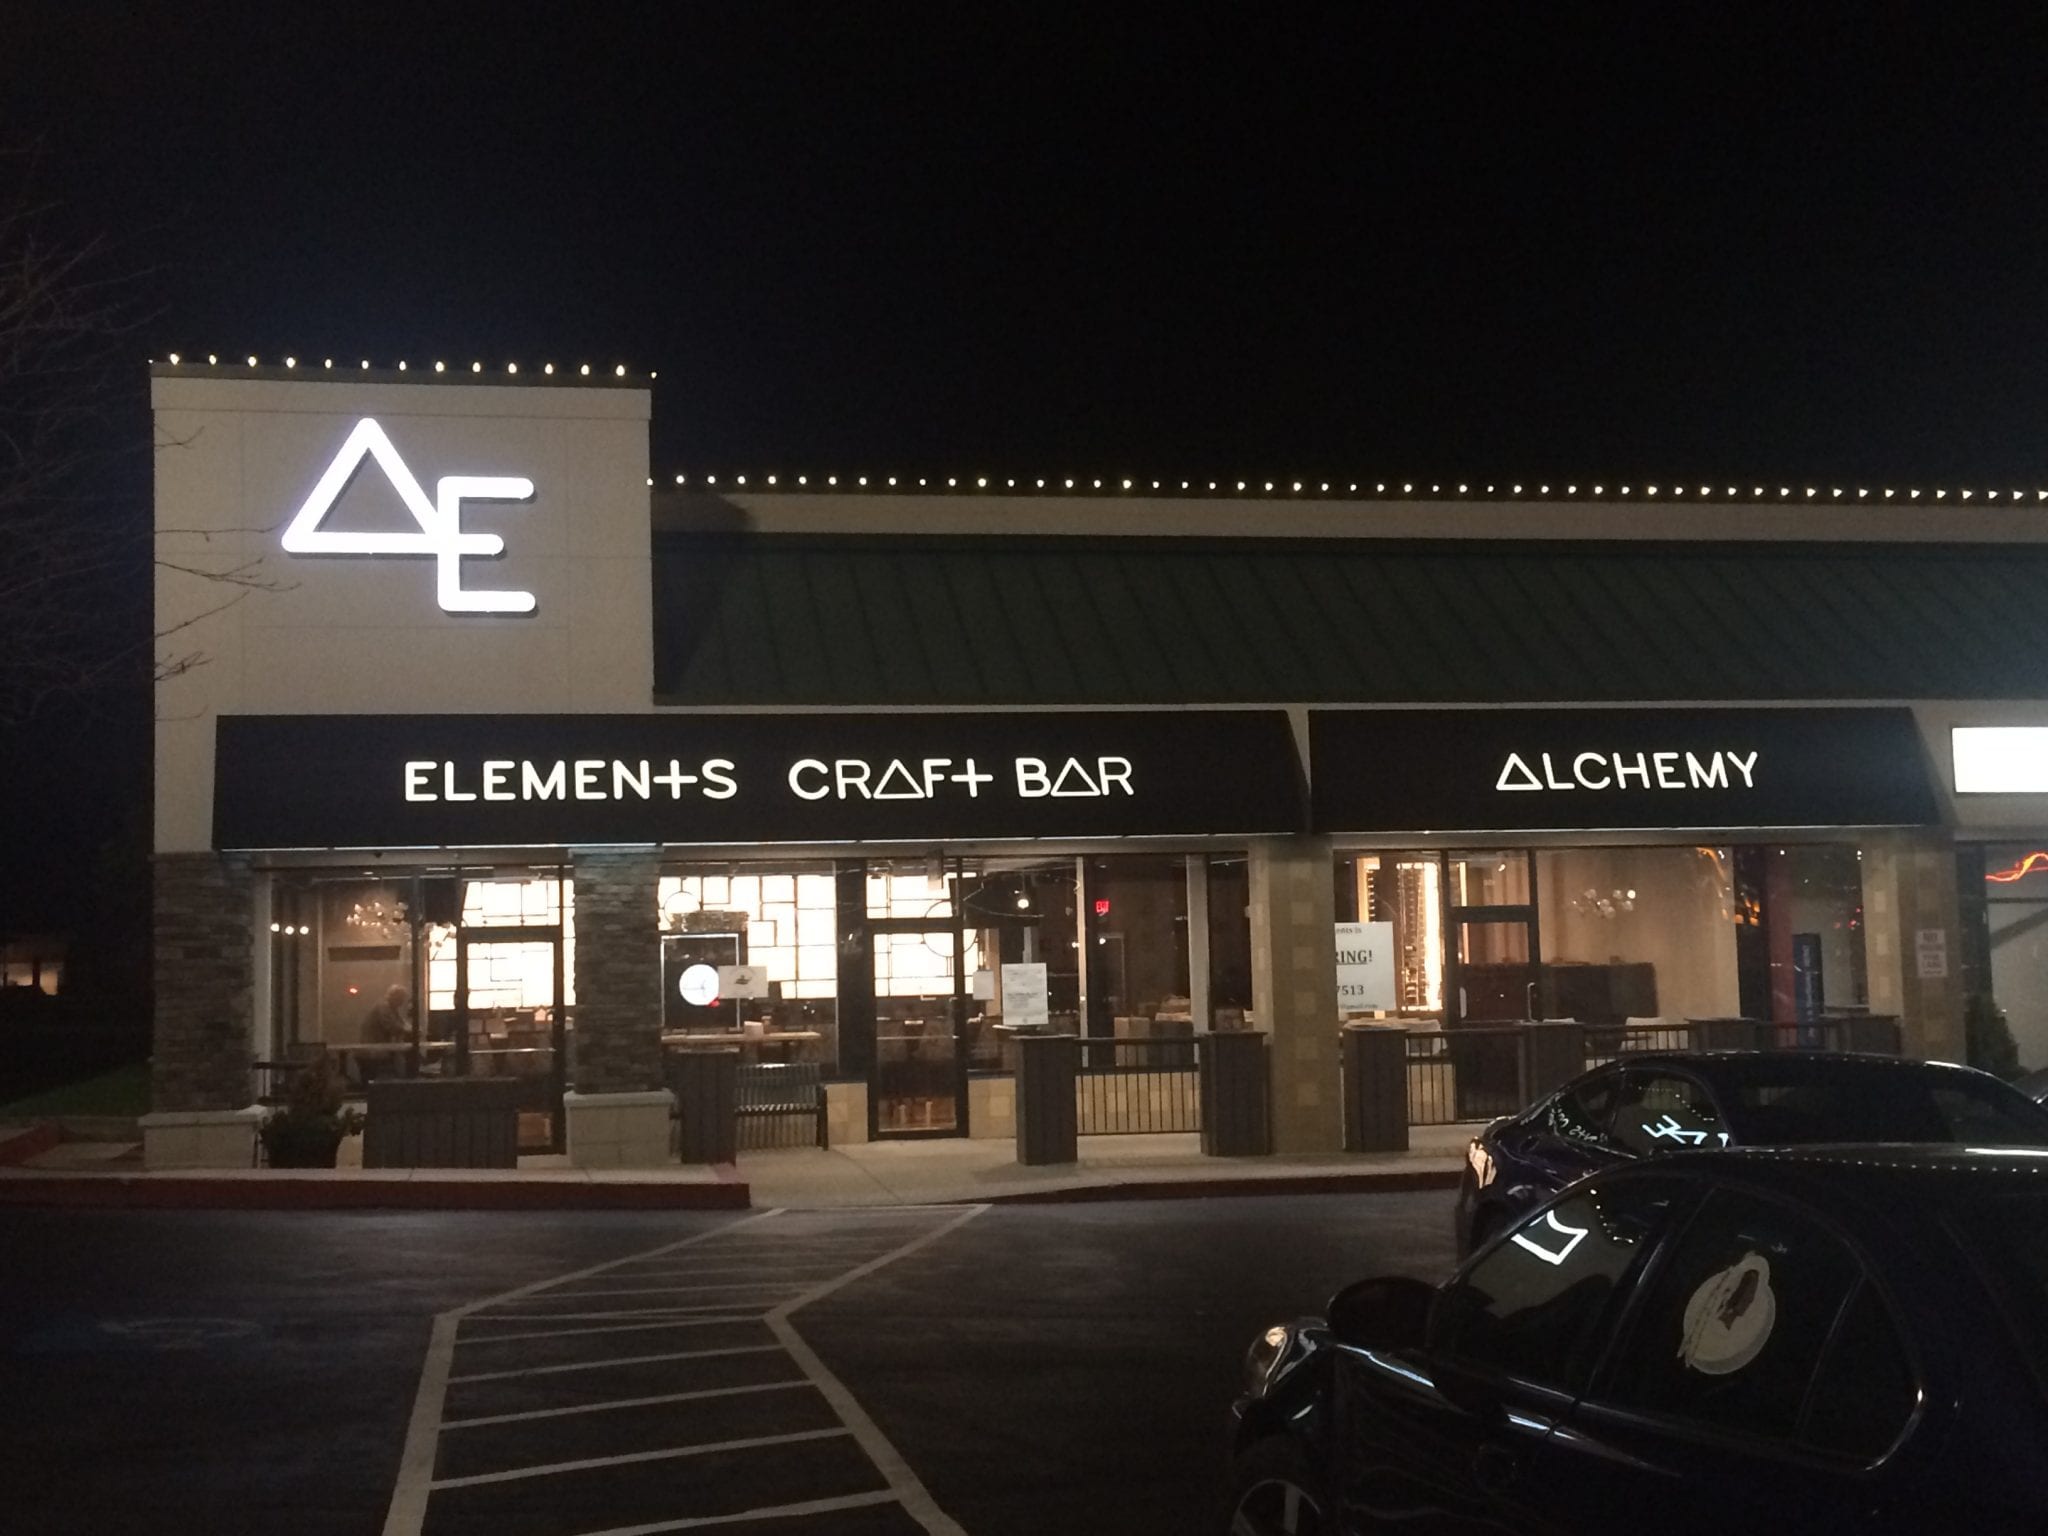 Alchemy Elements Signage